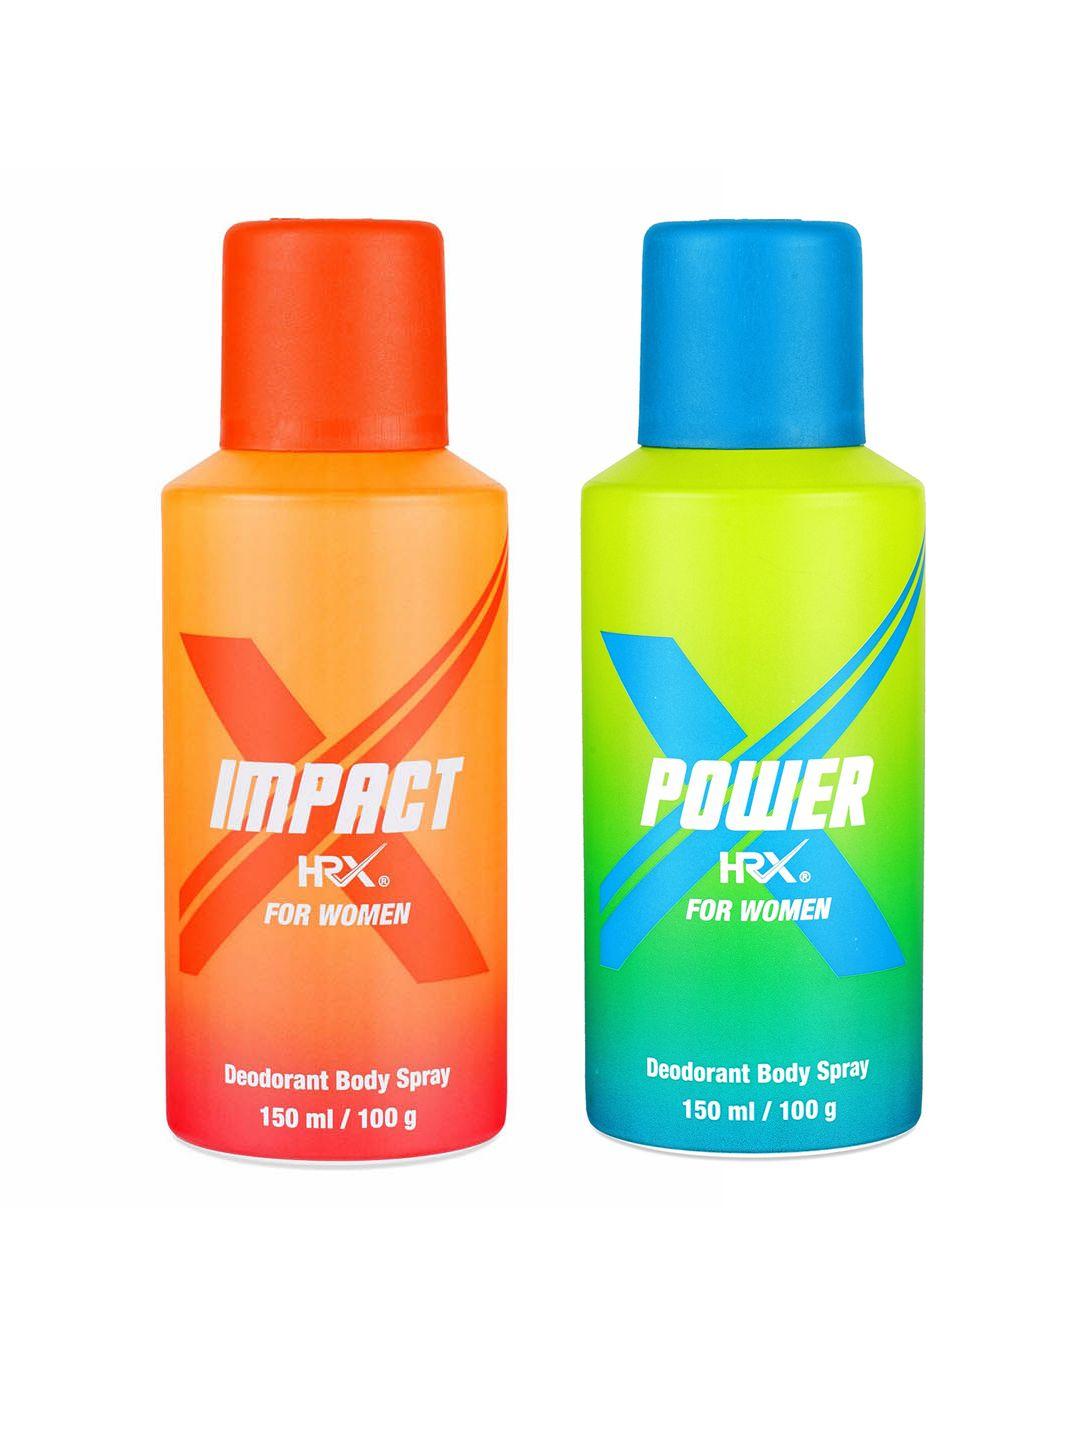 hrx women set of impact & power deodorant - 150 ml each